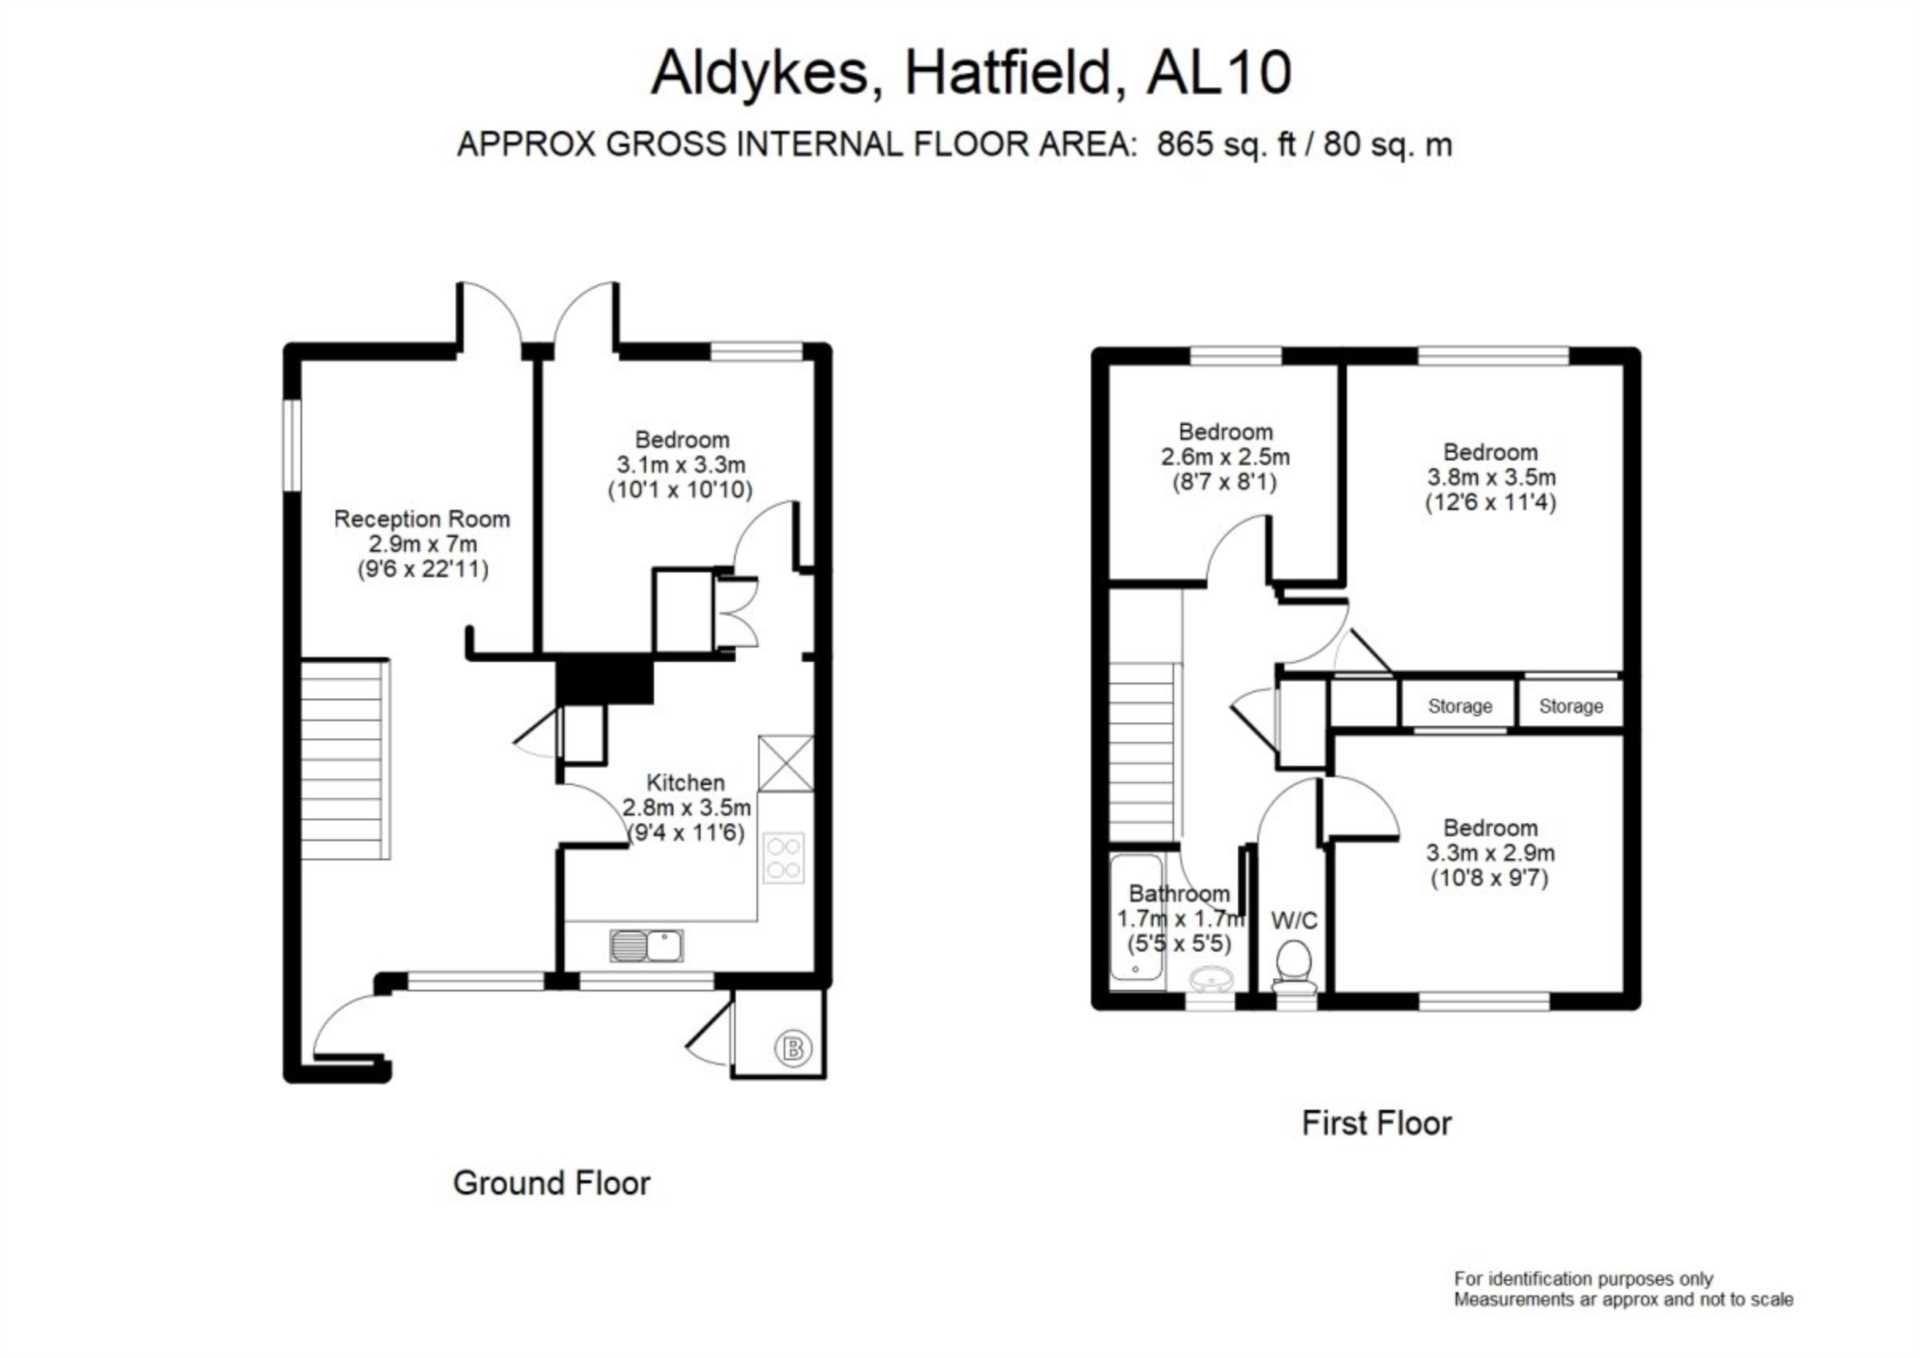 Aldykes, Hatfield, Image 2